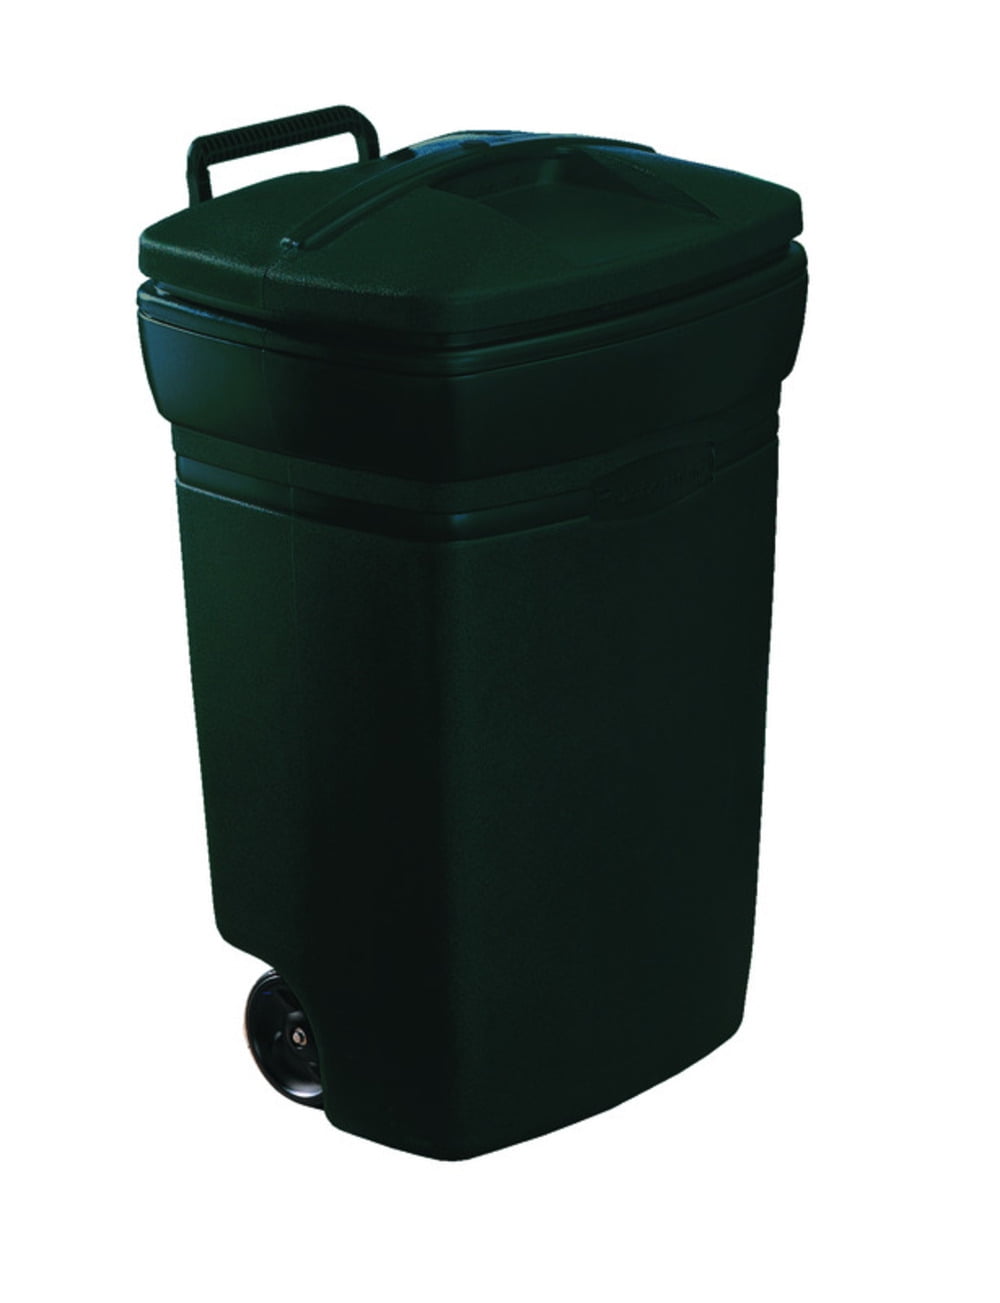 Roughneck 45 Gal. Black Wheeled Trash Can with Lid - Storage Bins & Baskets  - Denver, Colorado, Facebook Marketplace